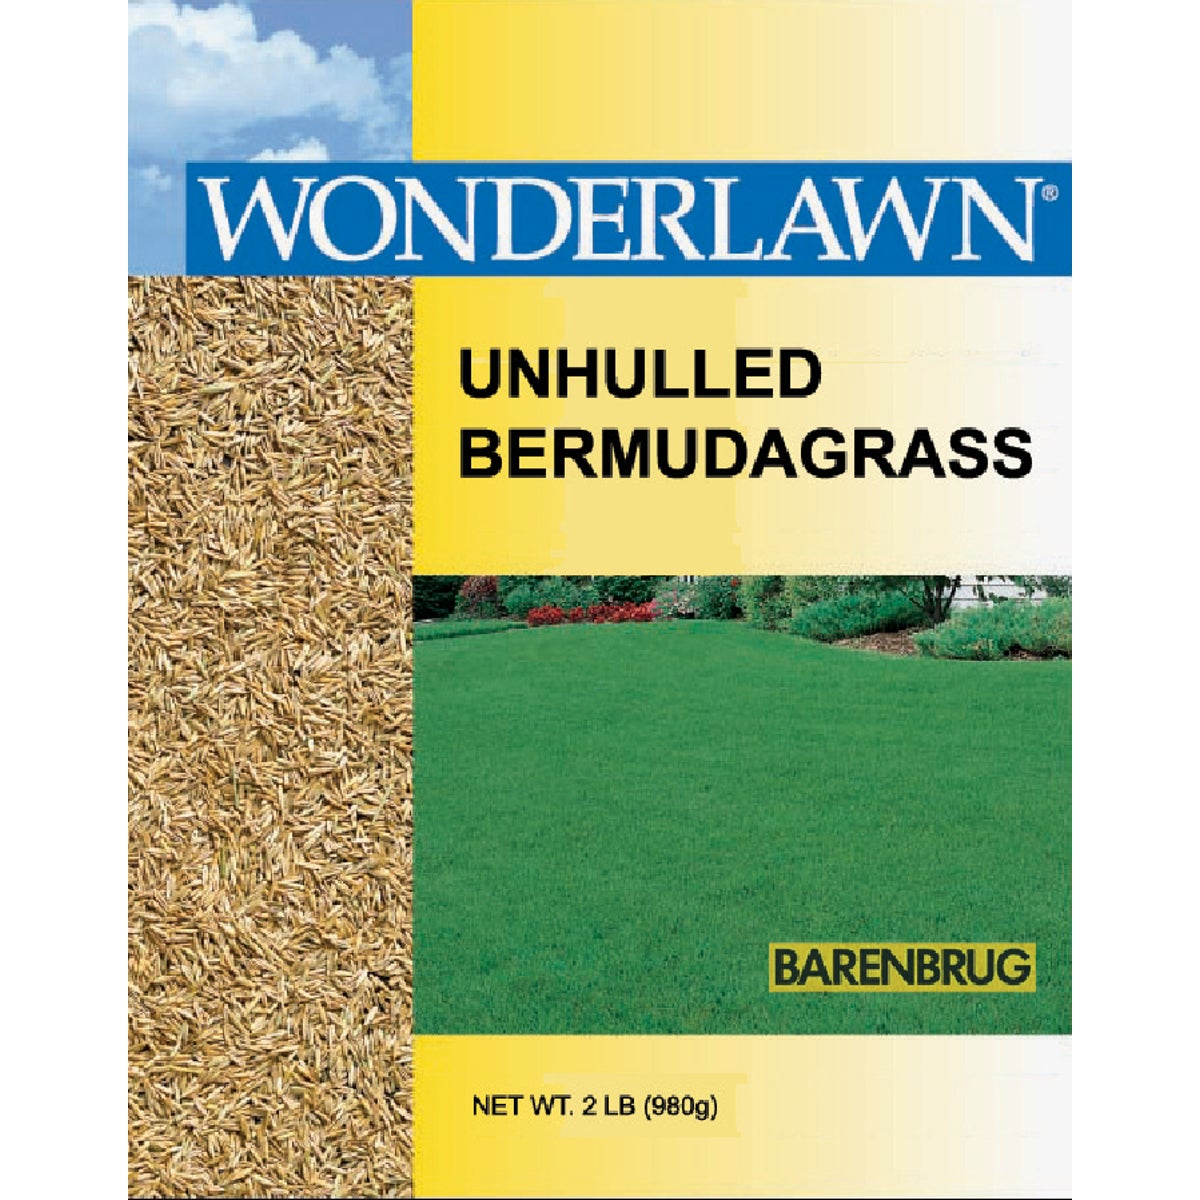 Item 752162, Unhulled Bermudagrass seed.